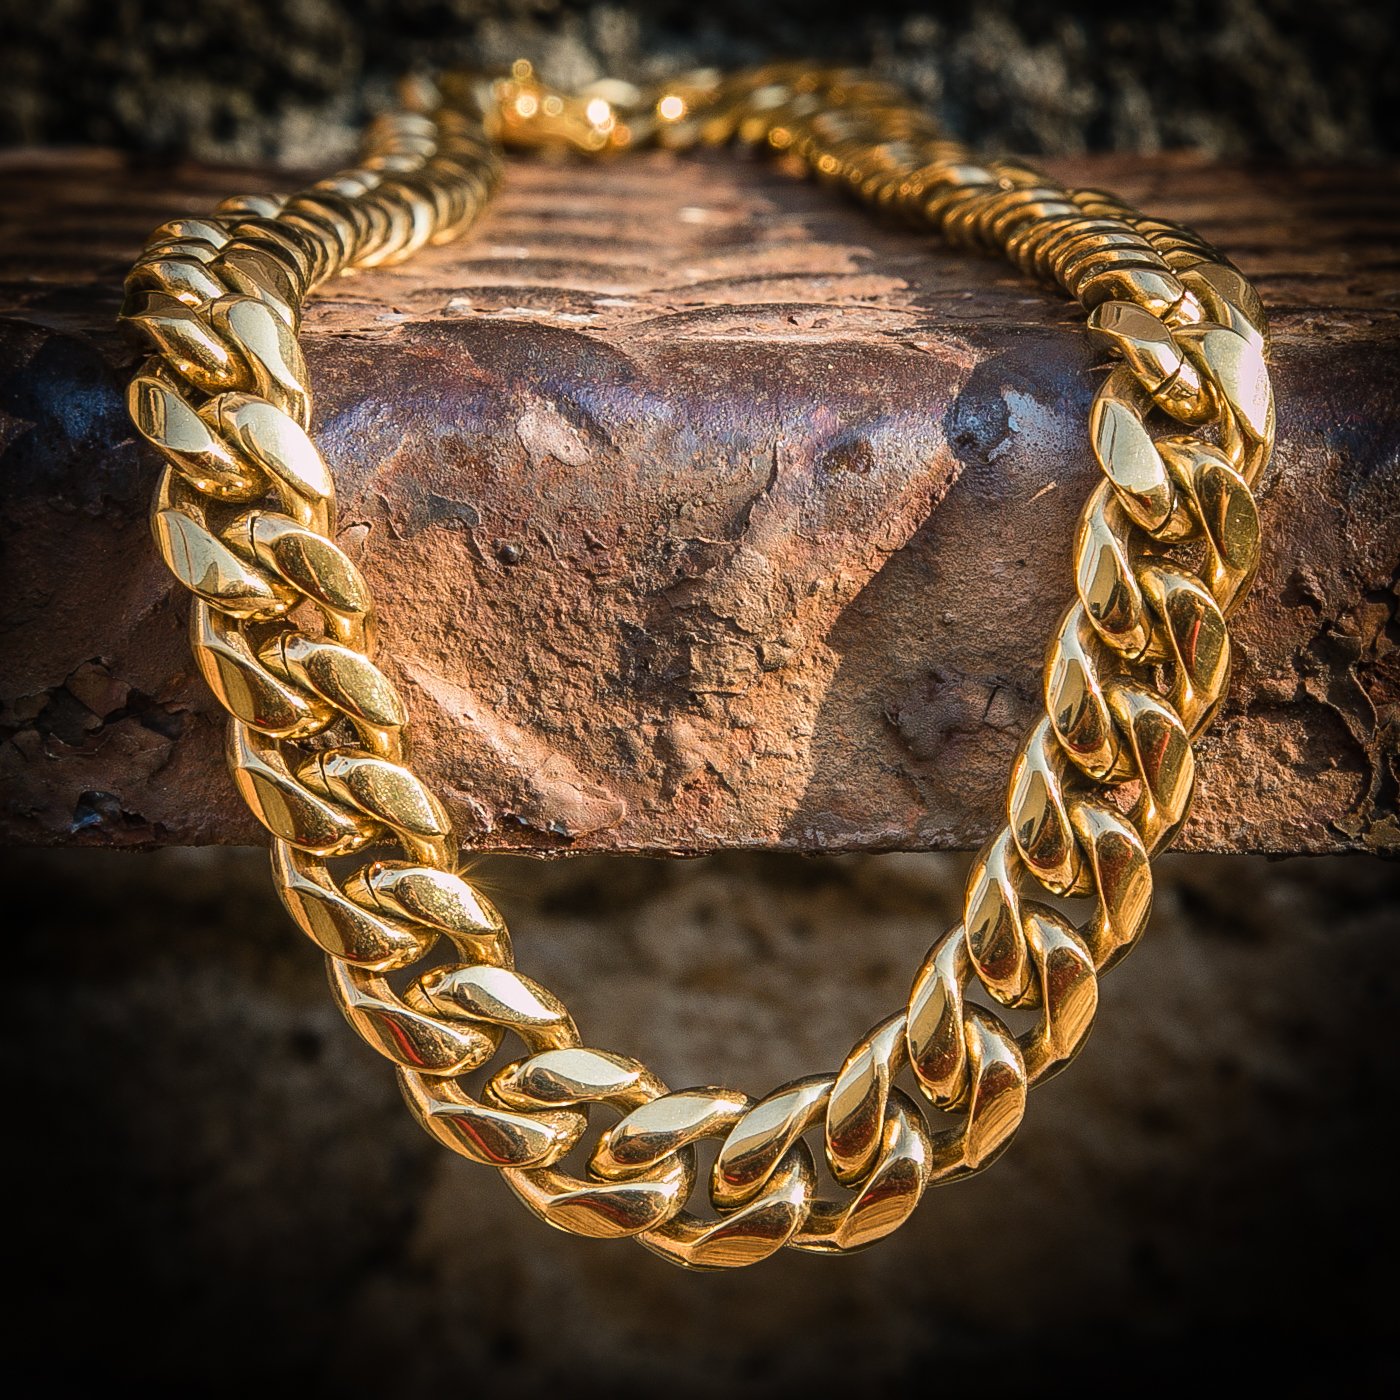 Cuban Link Gold Filled Necklace